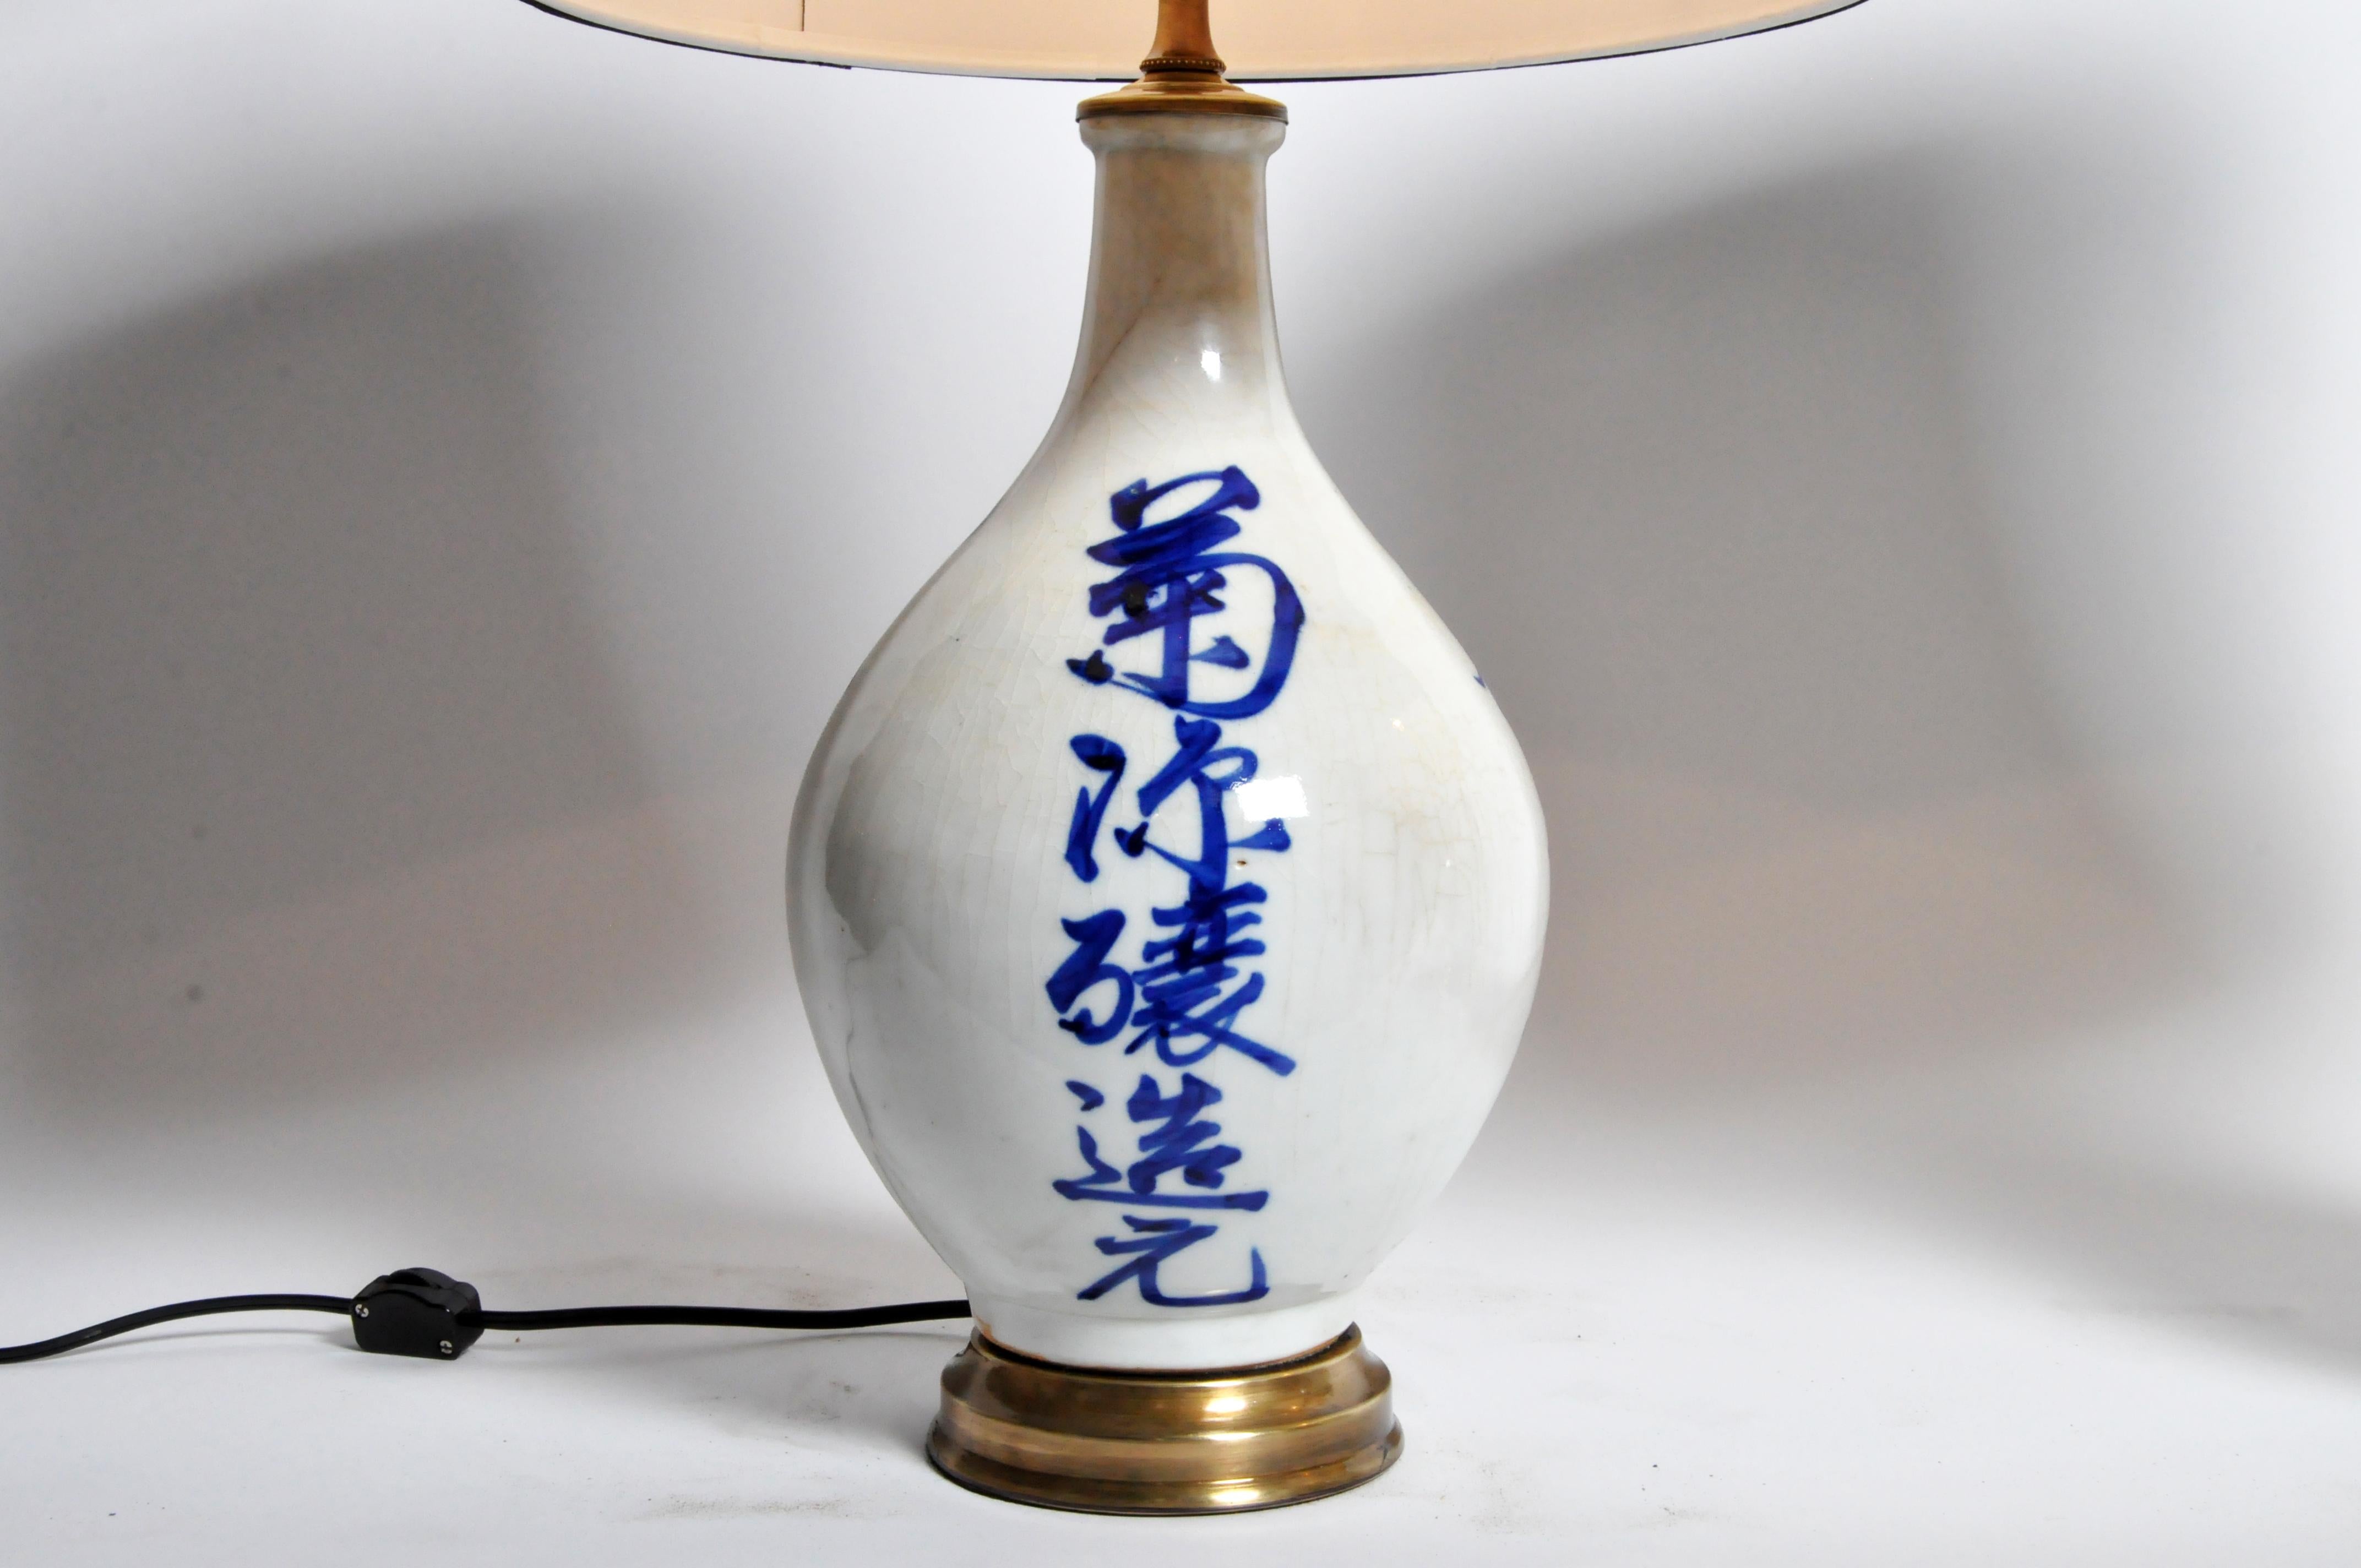 Japanese Sake Bottles Converted to Lamps 8